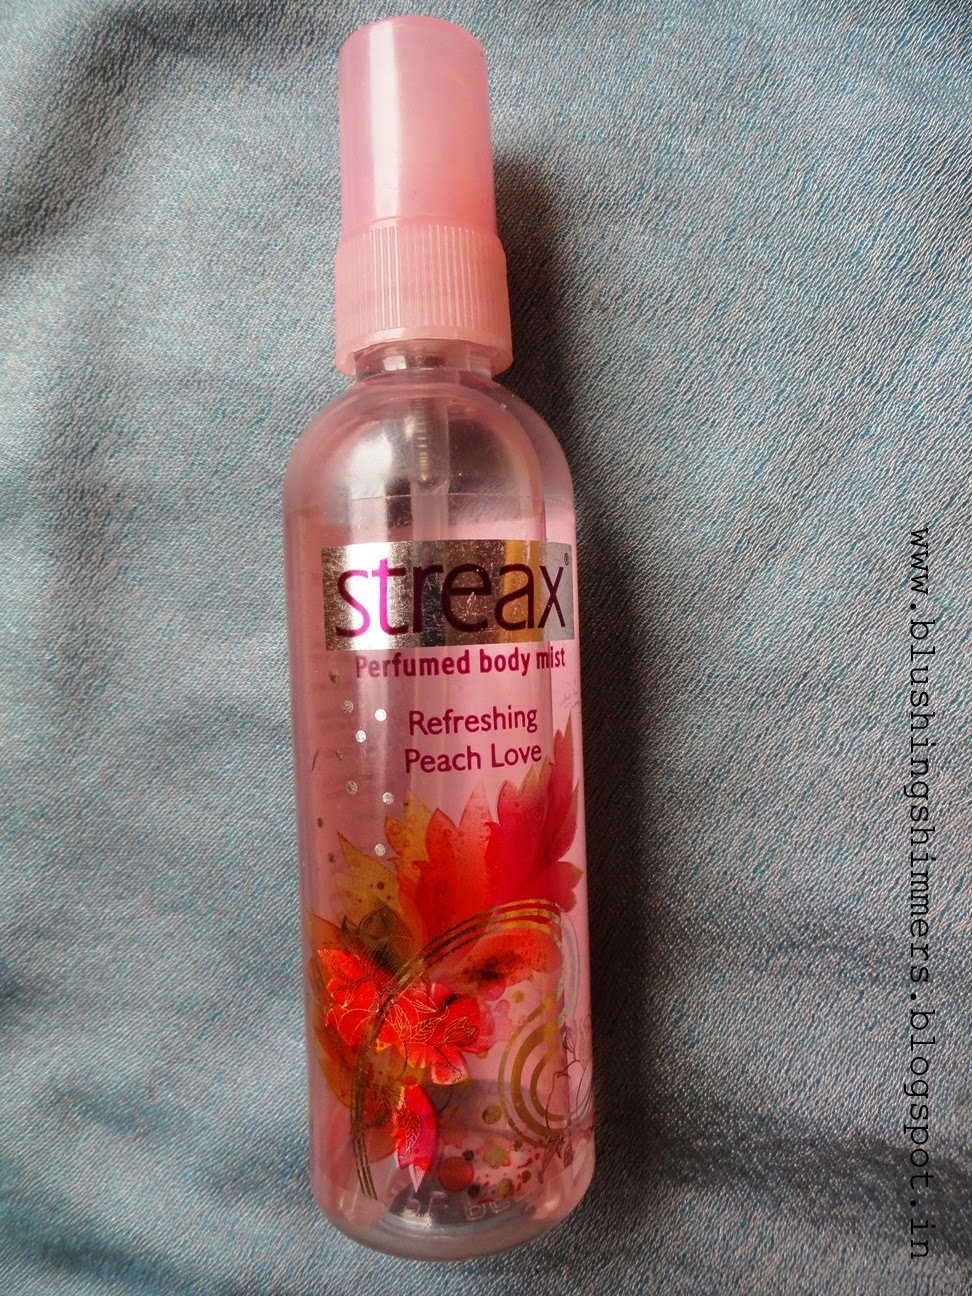 Streax Perfumed body Mist - Refreshing Peach Love Review